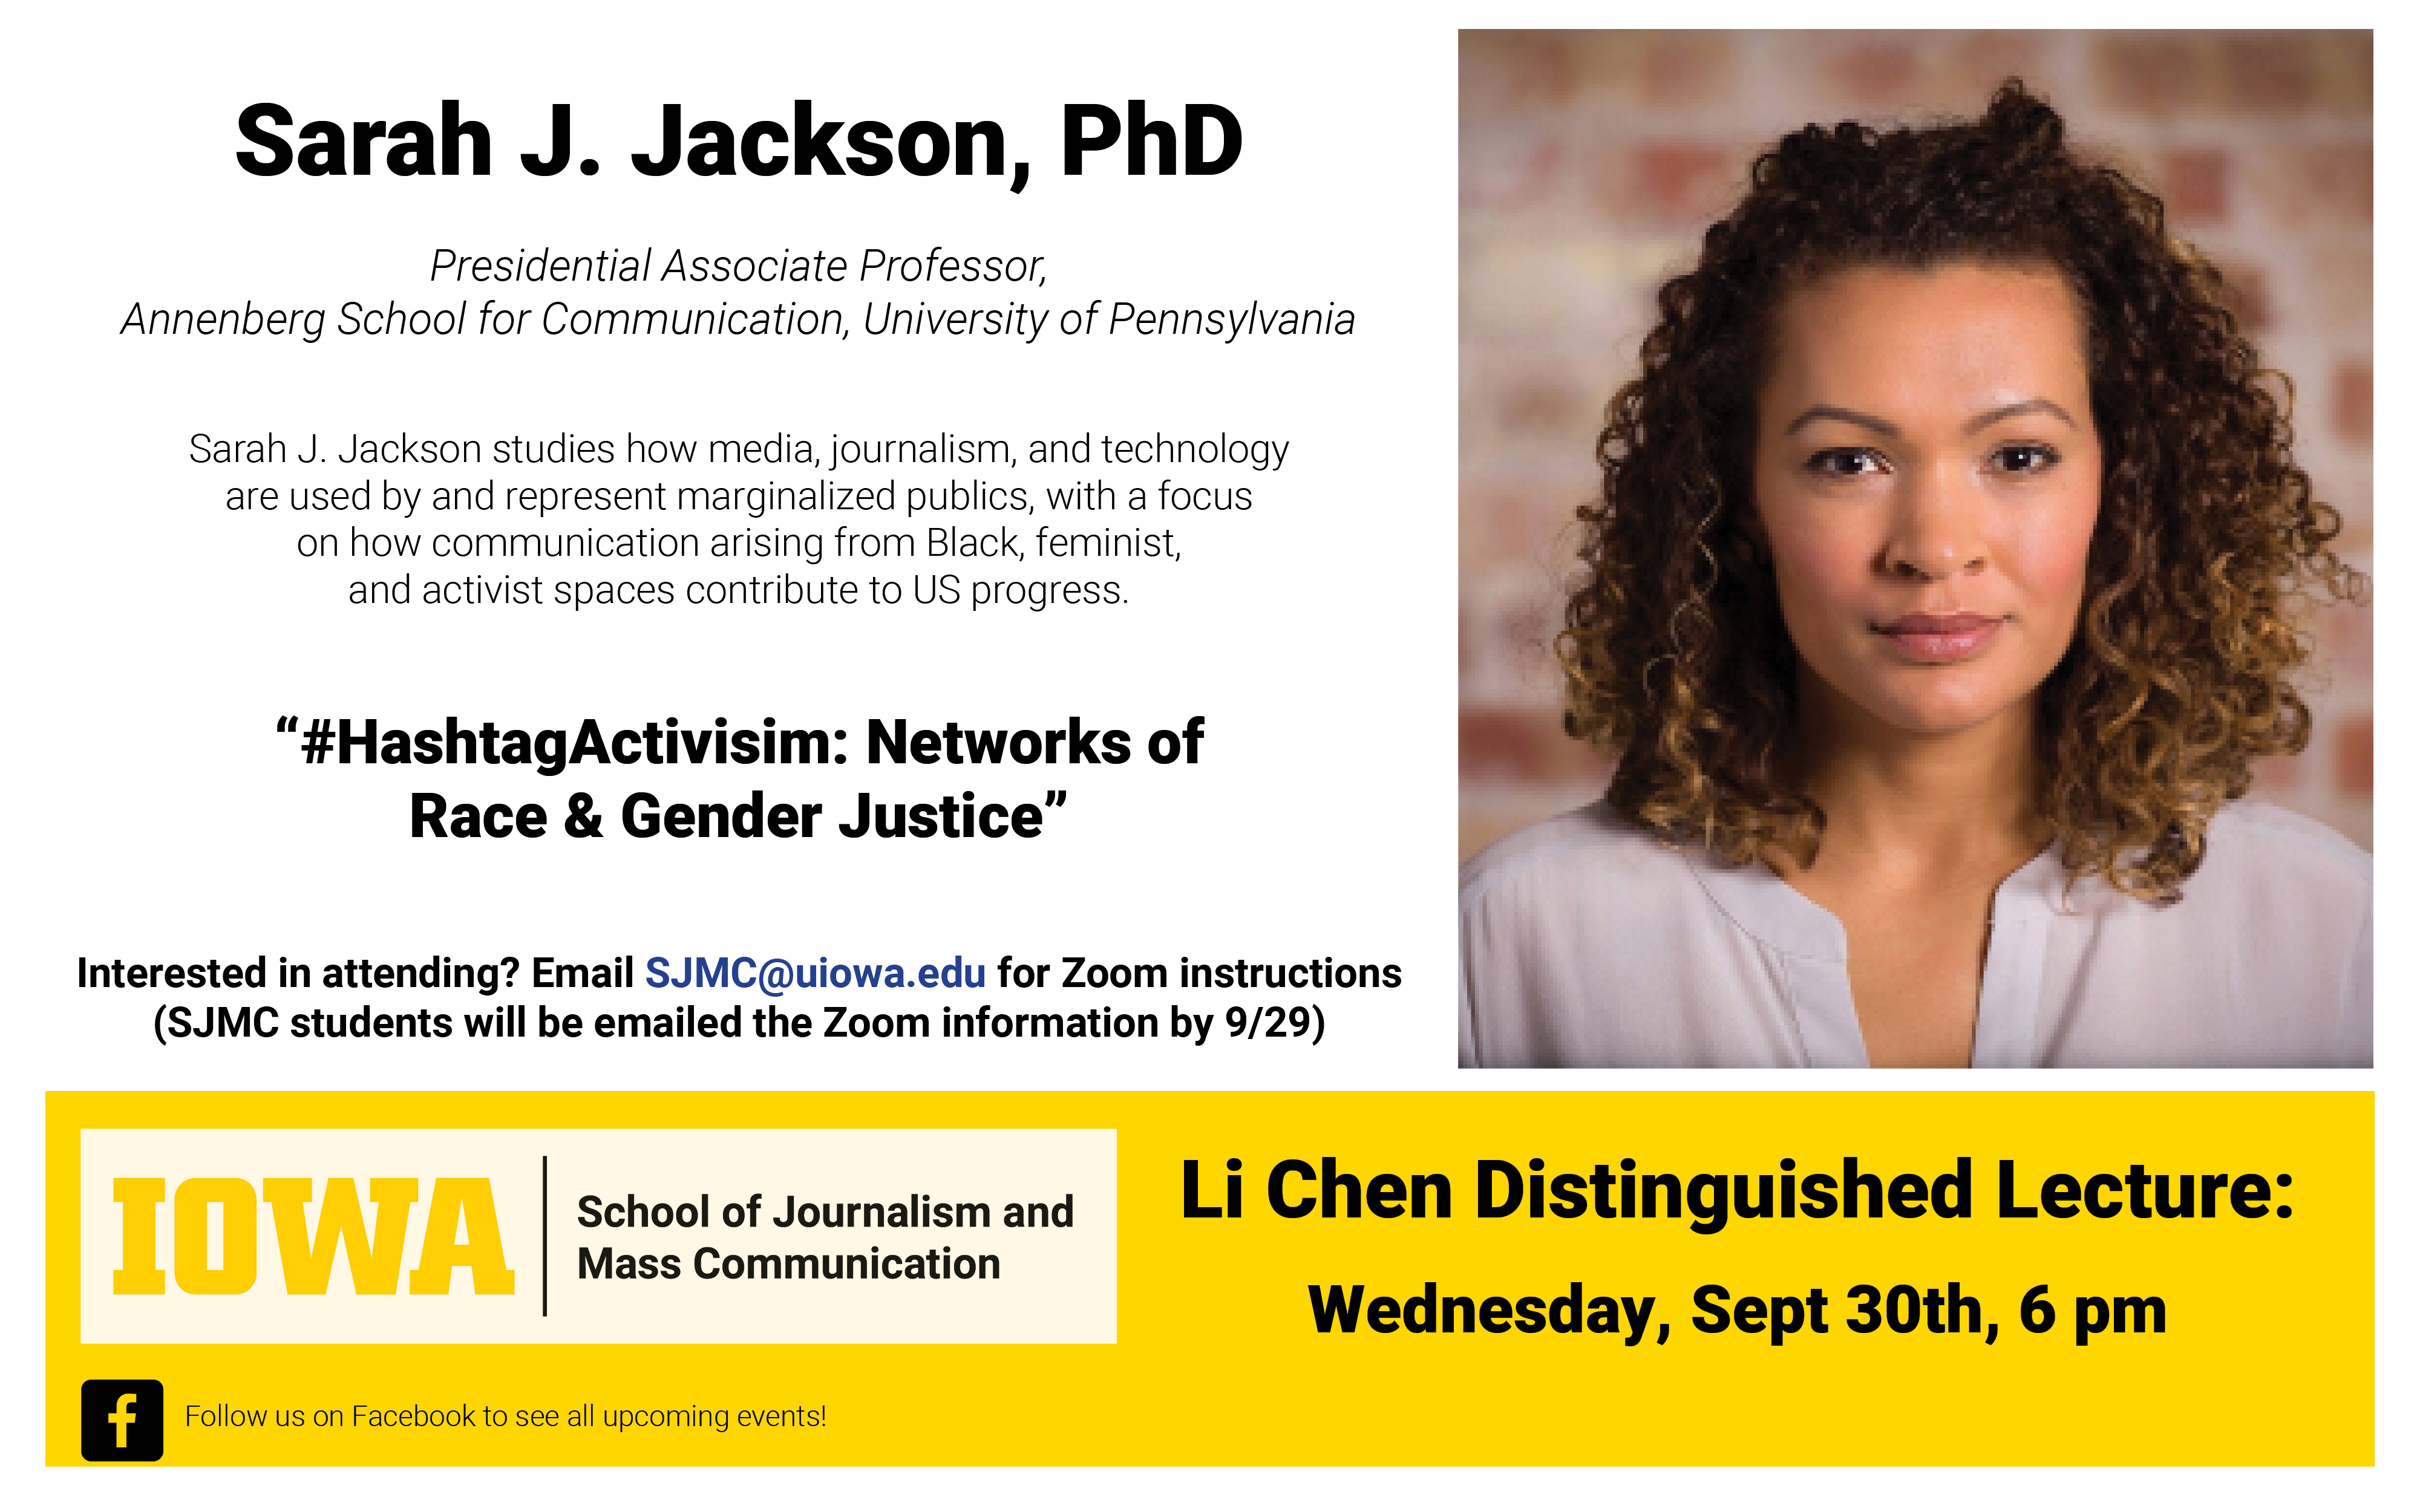 Li Chen Distinguished Lecture: #HashtagActivism: Networks of Race & Gender Justice promotional image